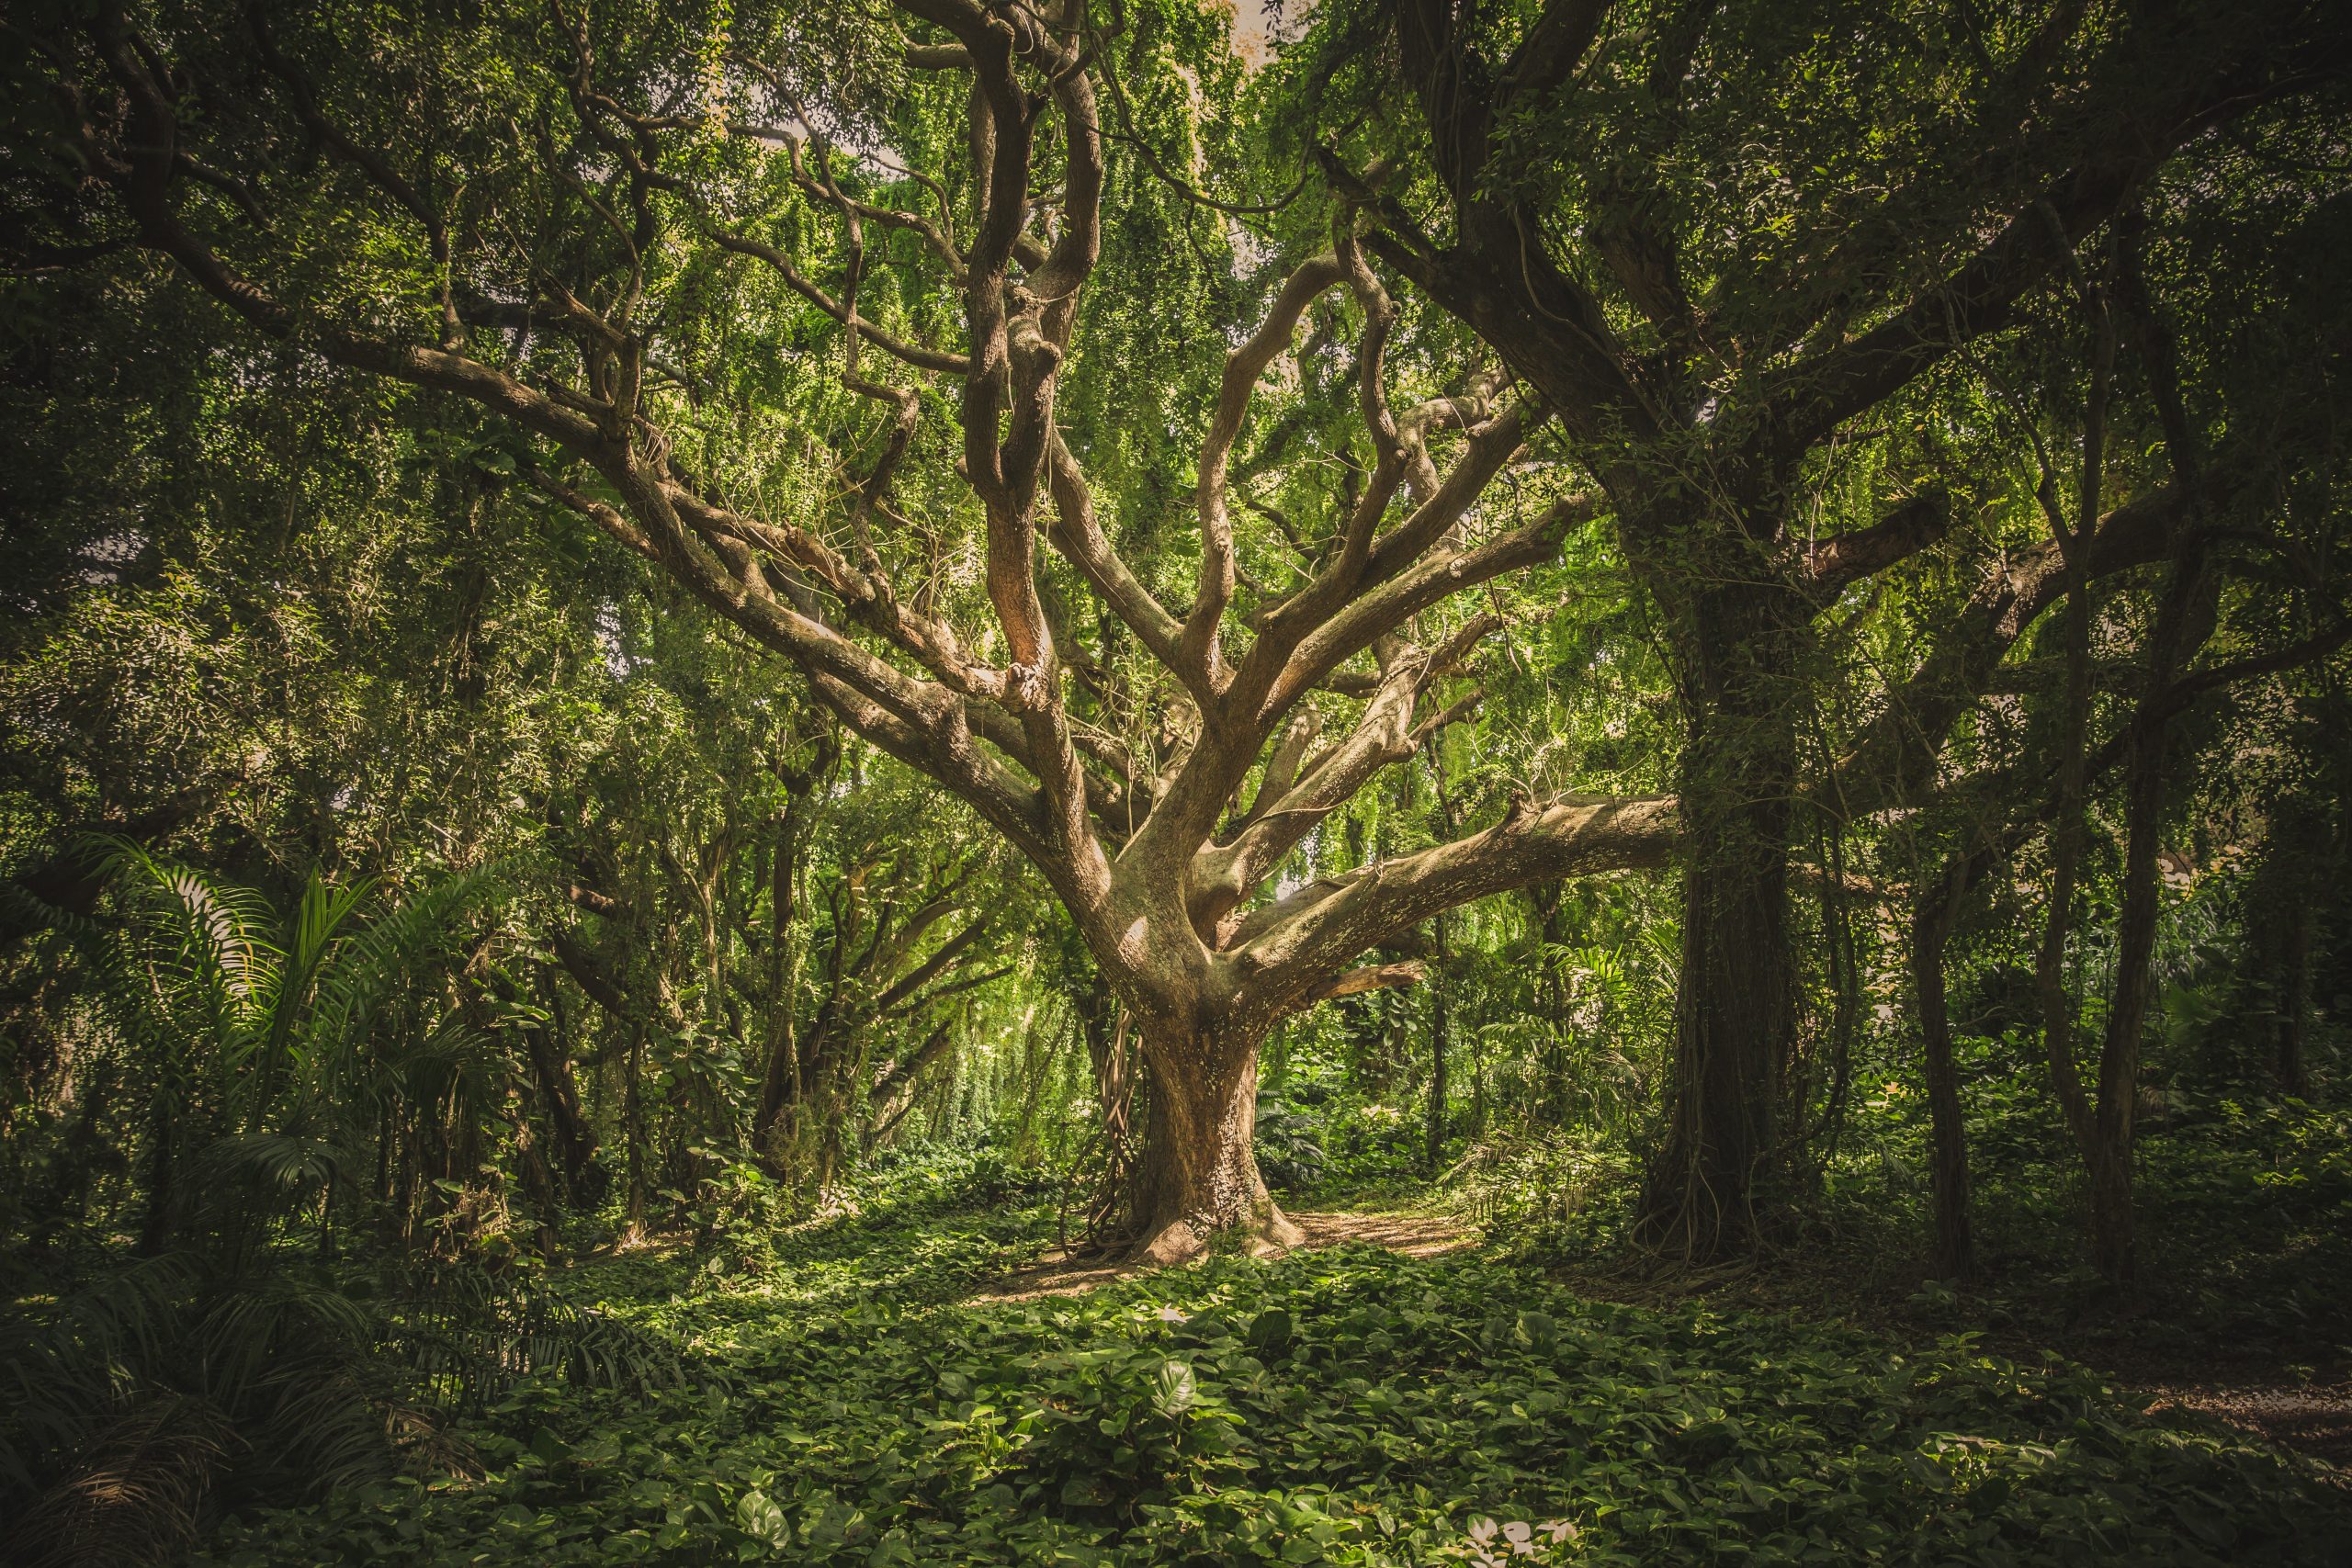 Inspirational Forest Captions for Instagram